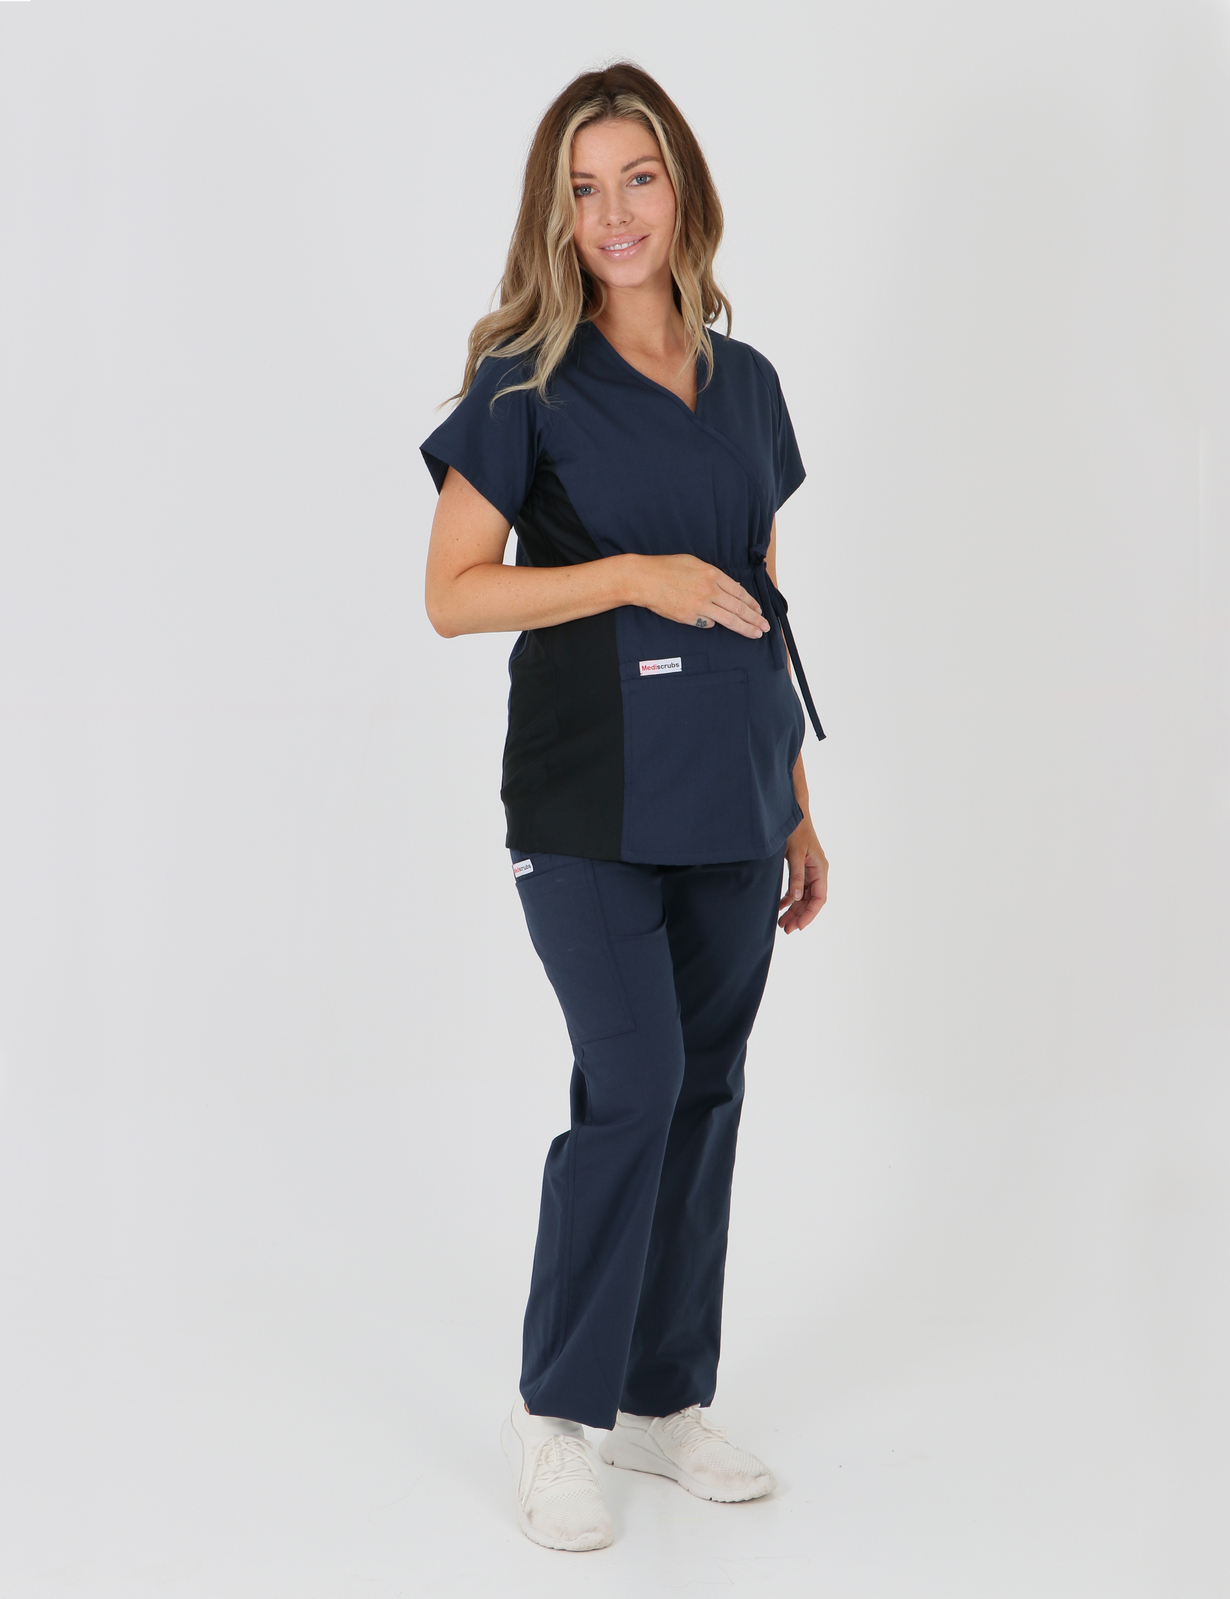 Rockhampton Hospital Clinical Nurse Uniform Top Only Bundle (Maternity Spandex Top in Navy incl Logos)